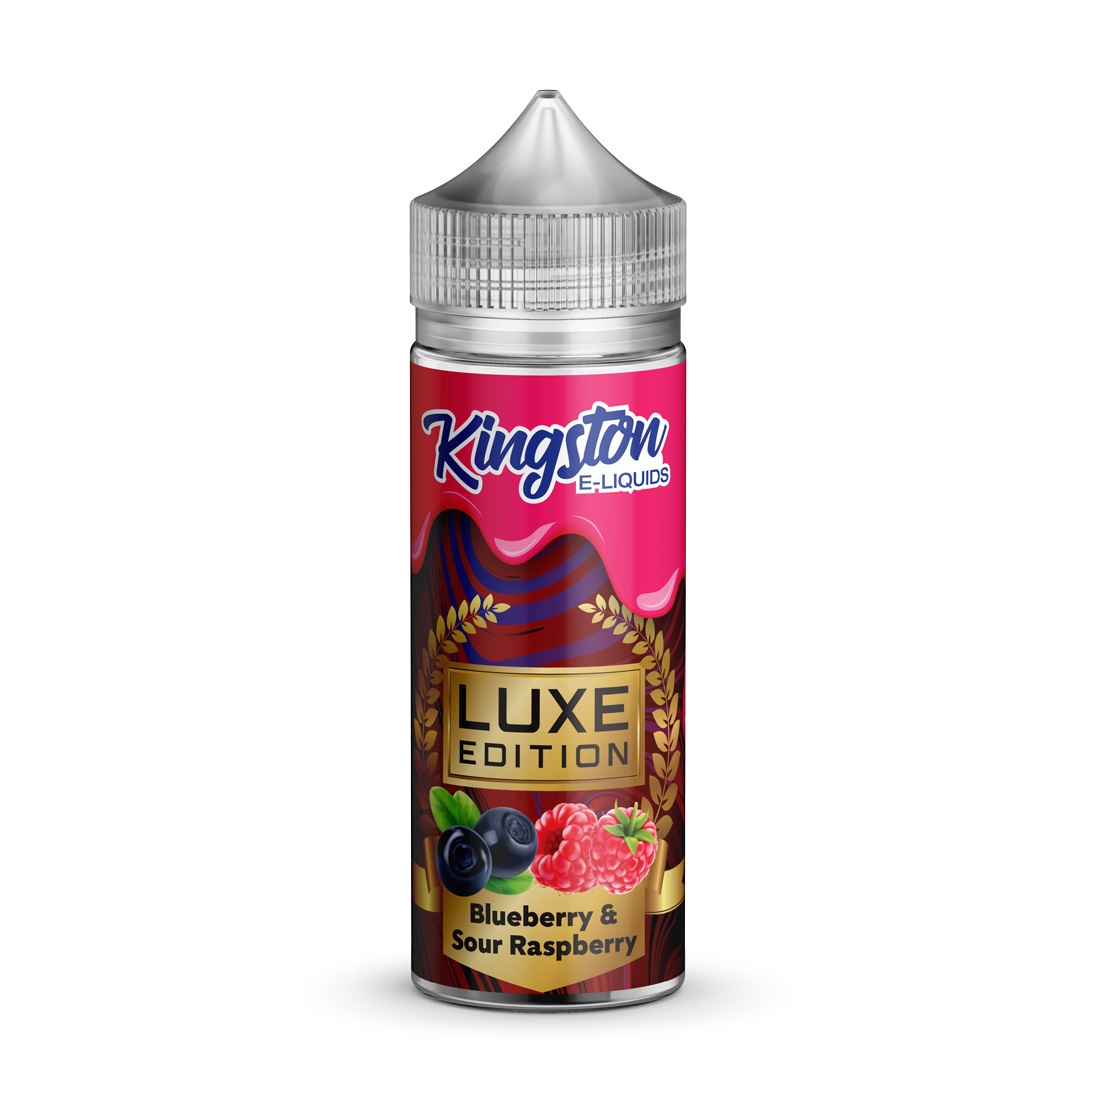 Kingston-Luxe-Blueberry-Sour-Raspberry-E-Liquid